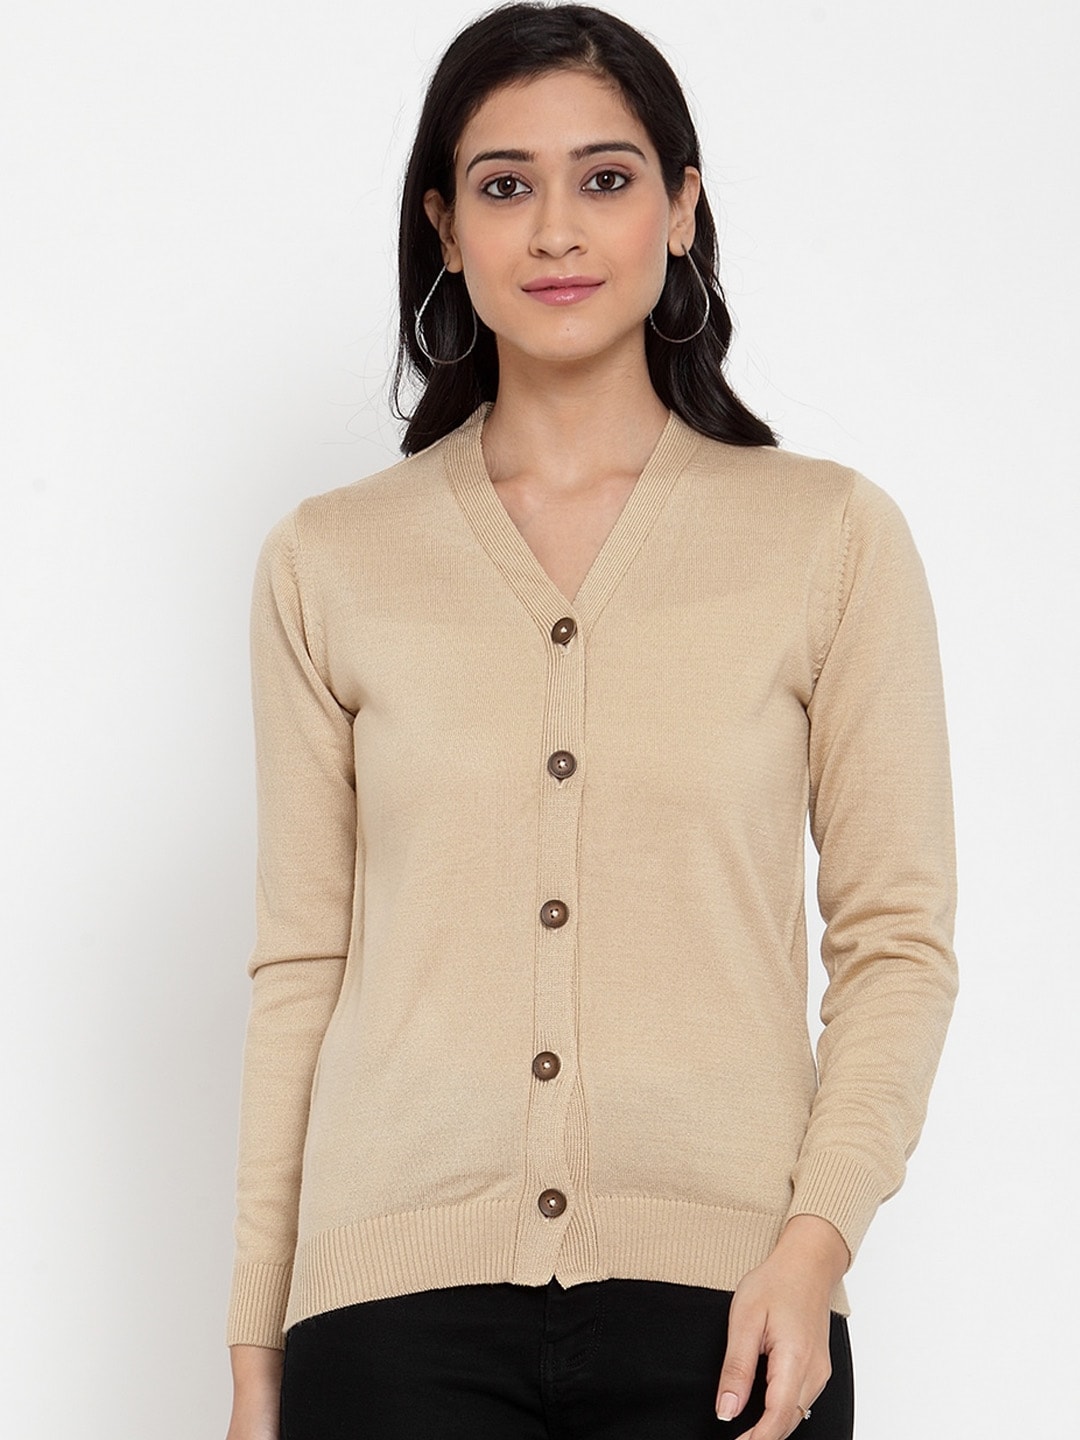 Kalt Women Beige Solid Cardigan Sweater Price in India